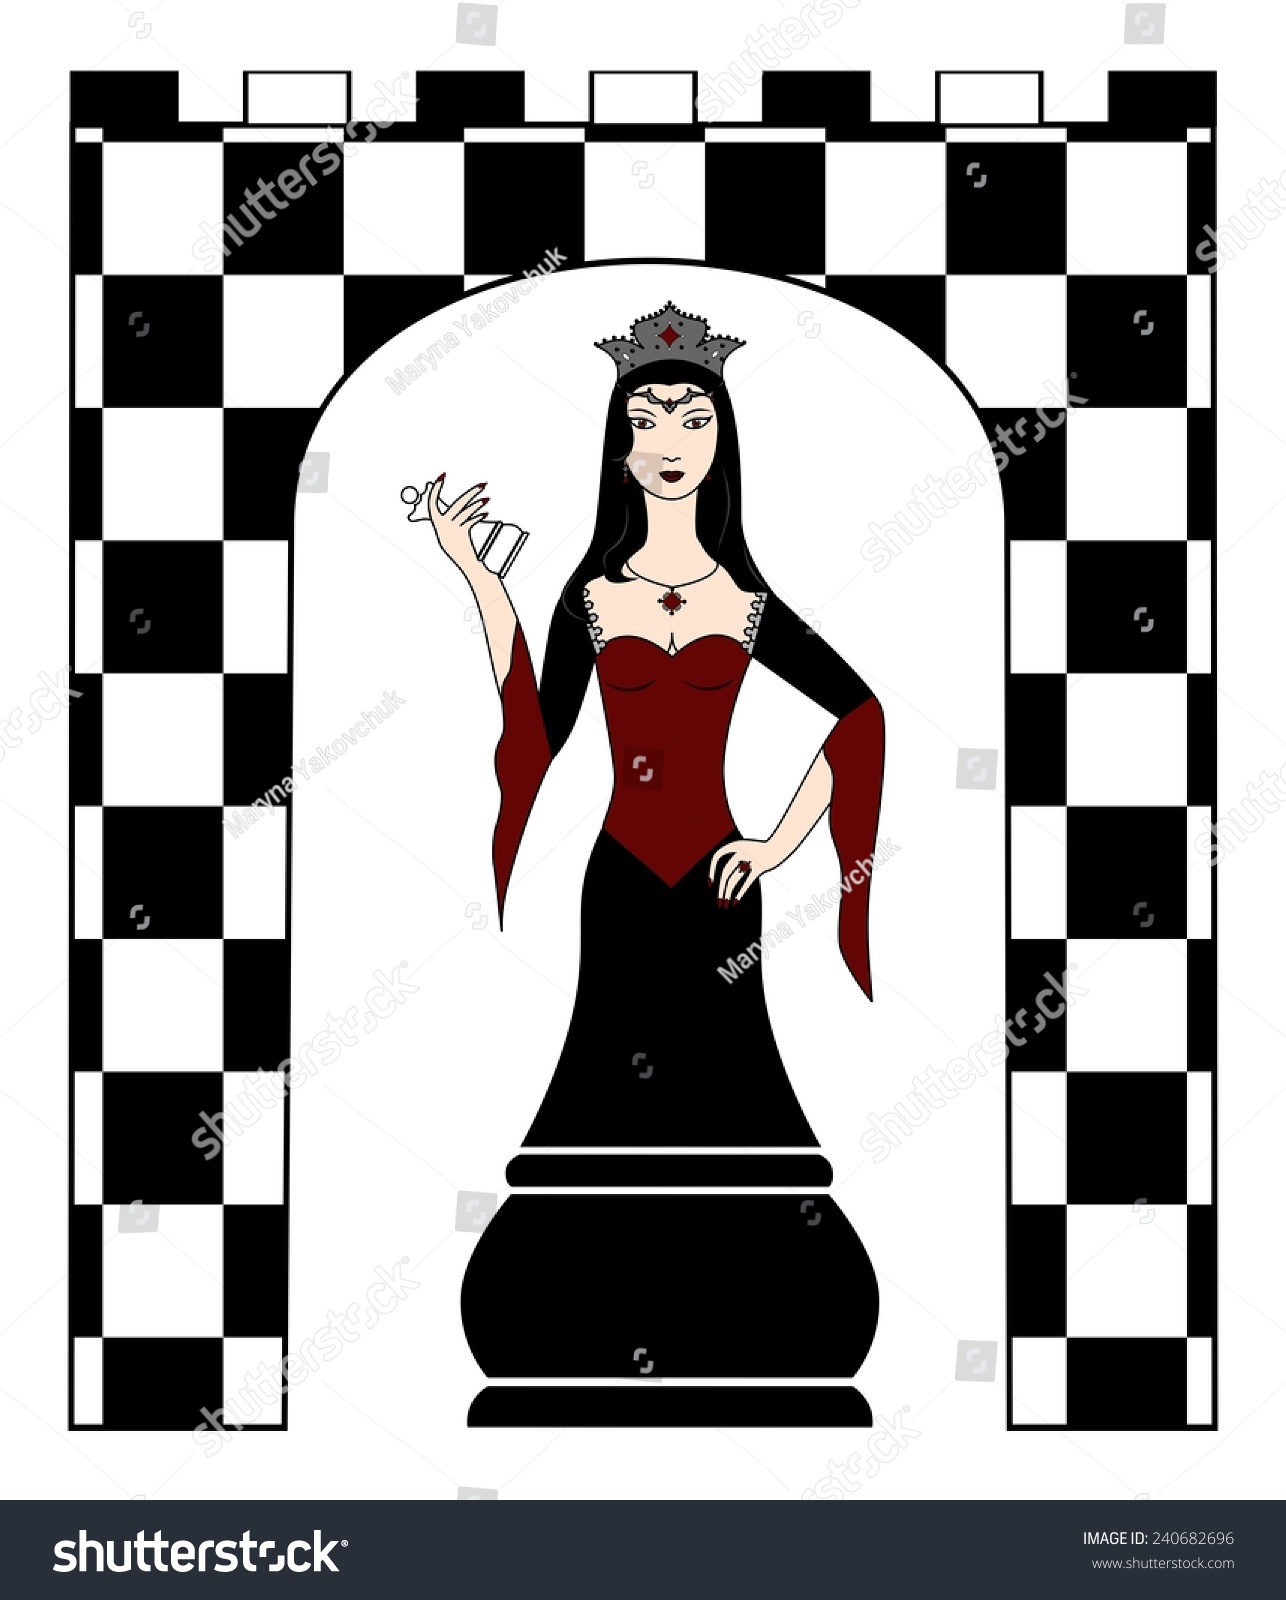 Шахматная Королева иллюстрация